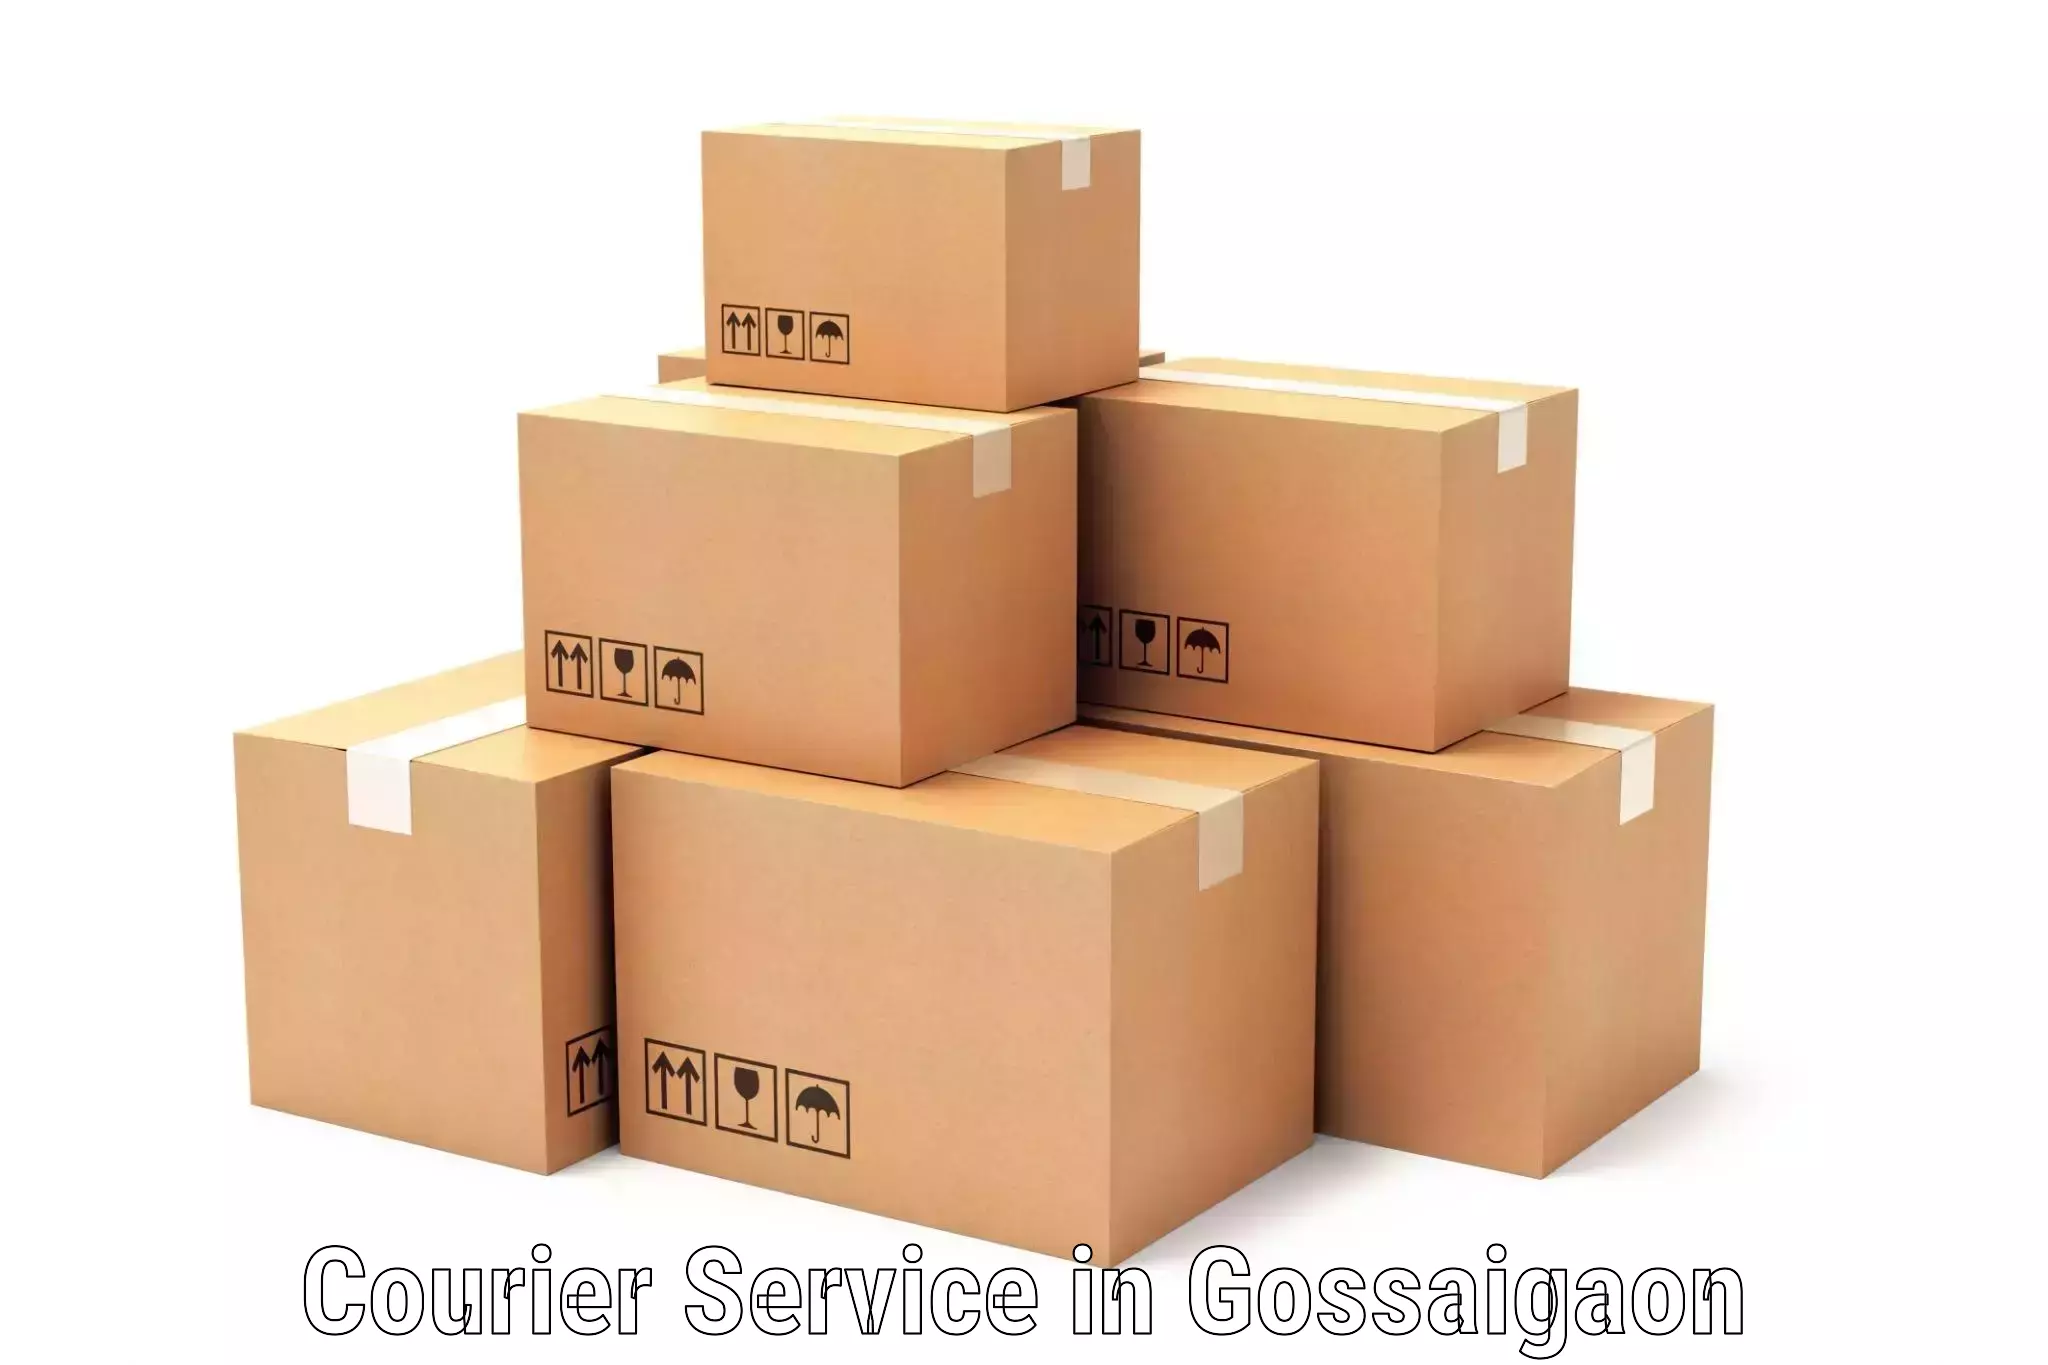 Scheduled delivery in Gossaigaon